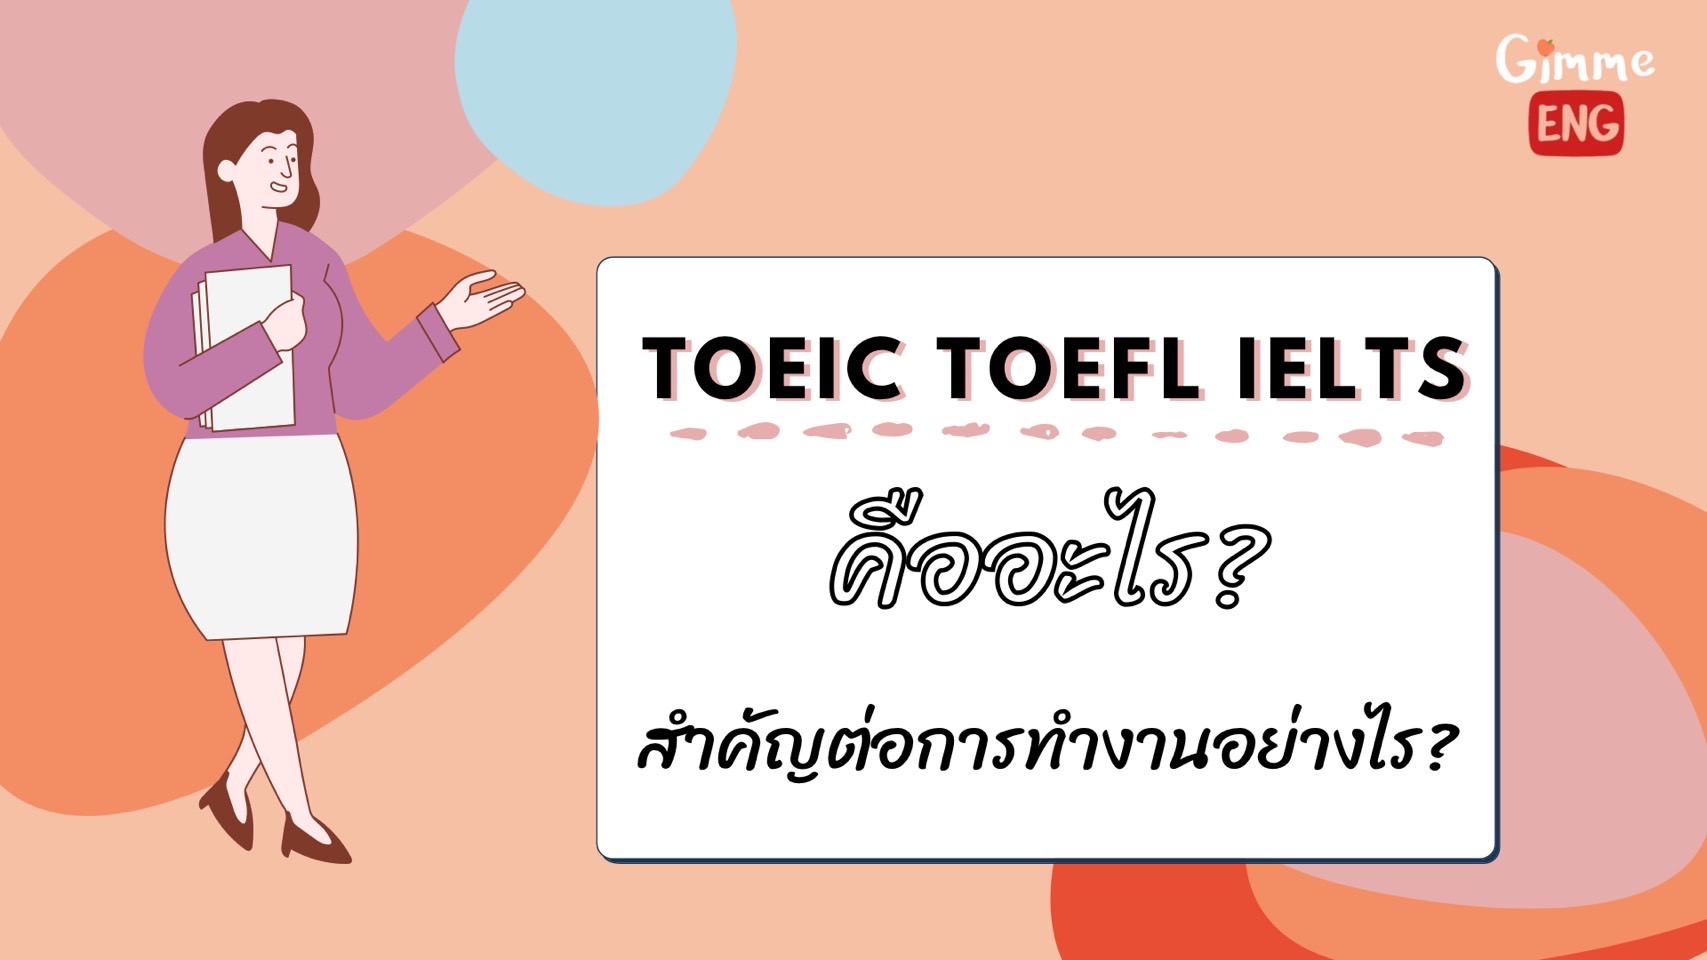 TOEIC TOEFL IELTS คืออะไร